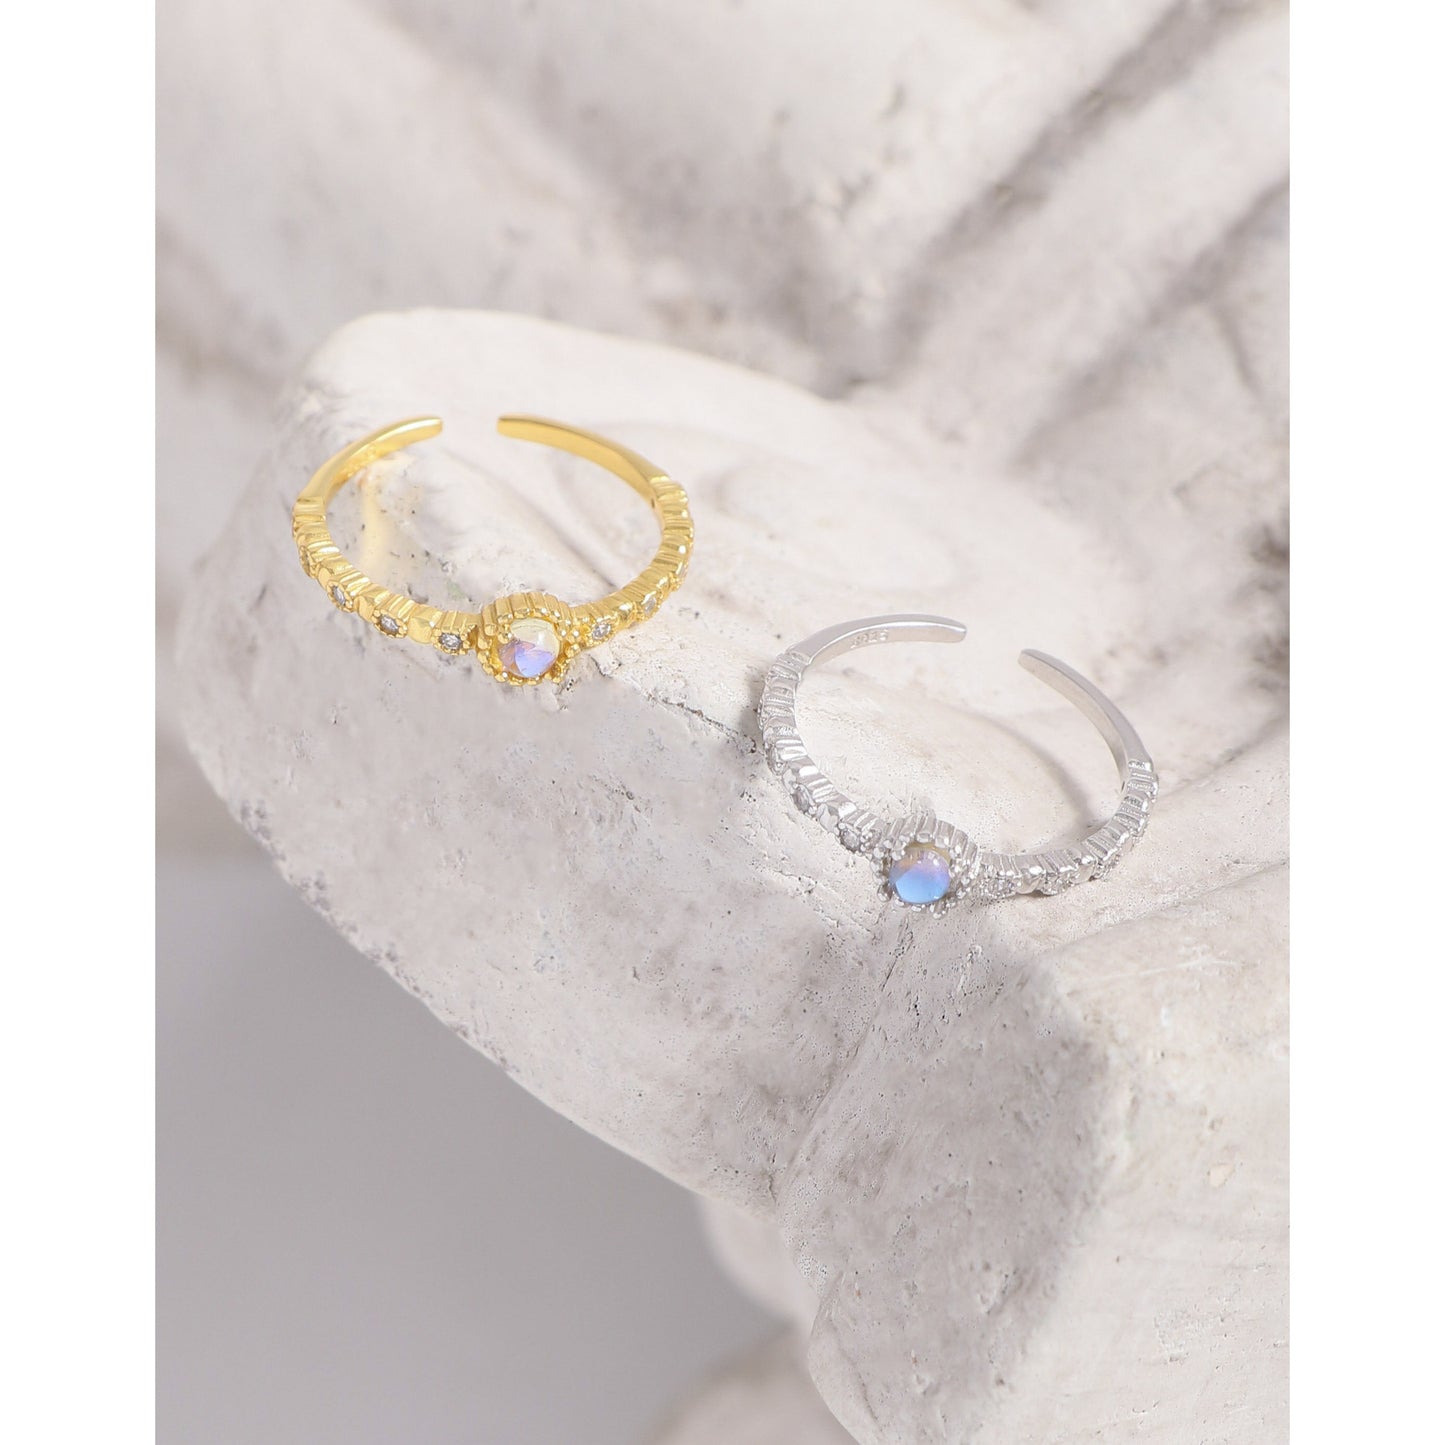 zircon moonstone open ring sterling silver S925 female fashion jewelry